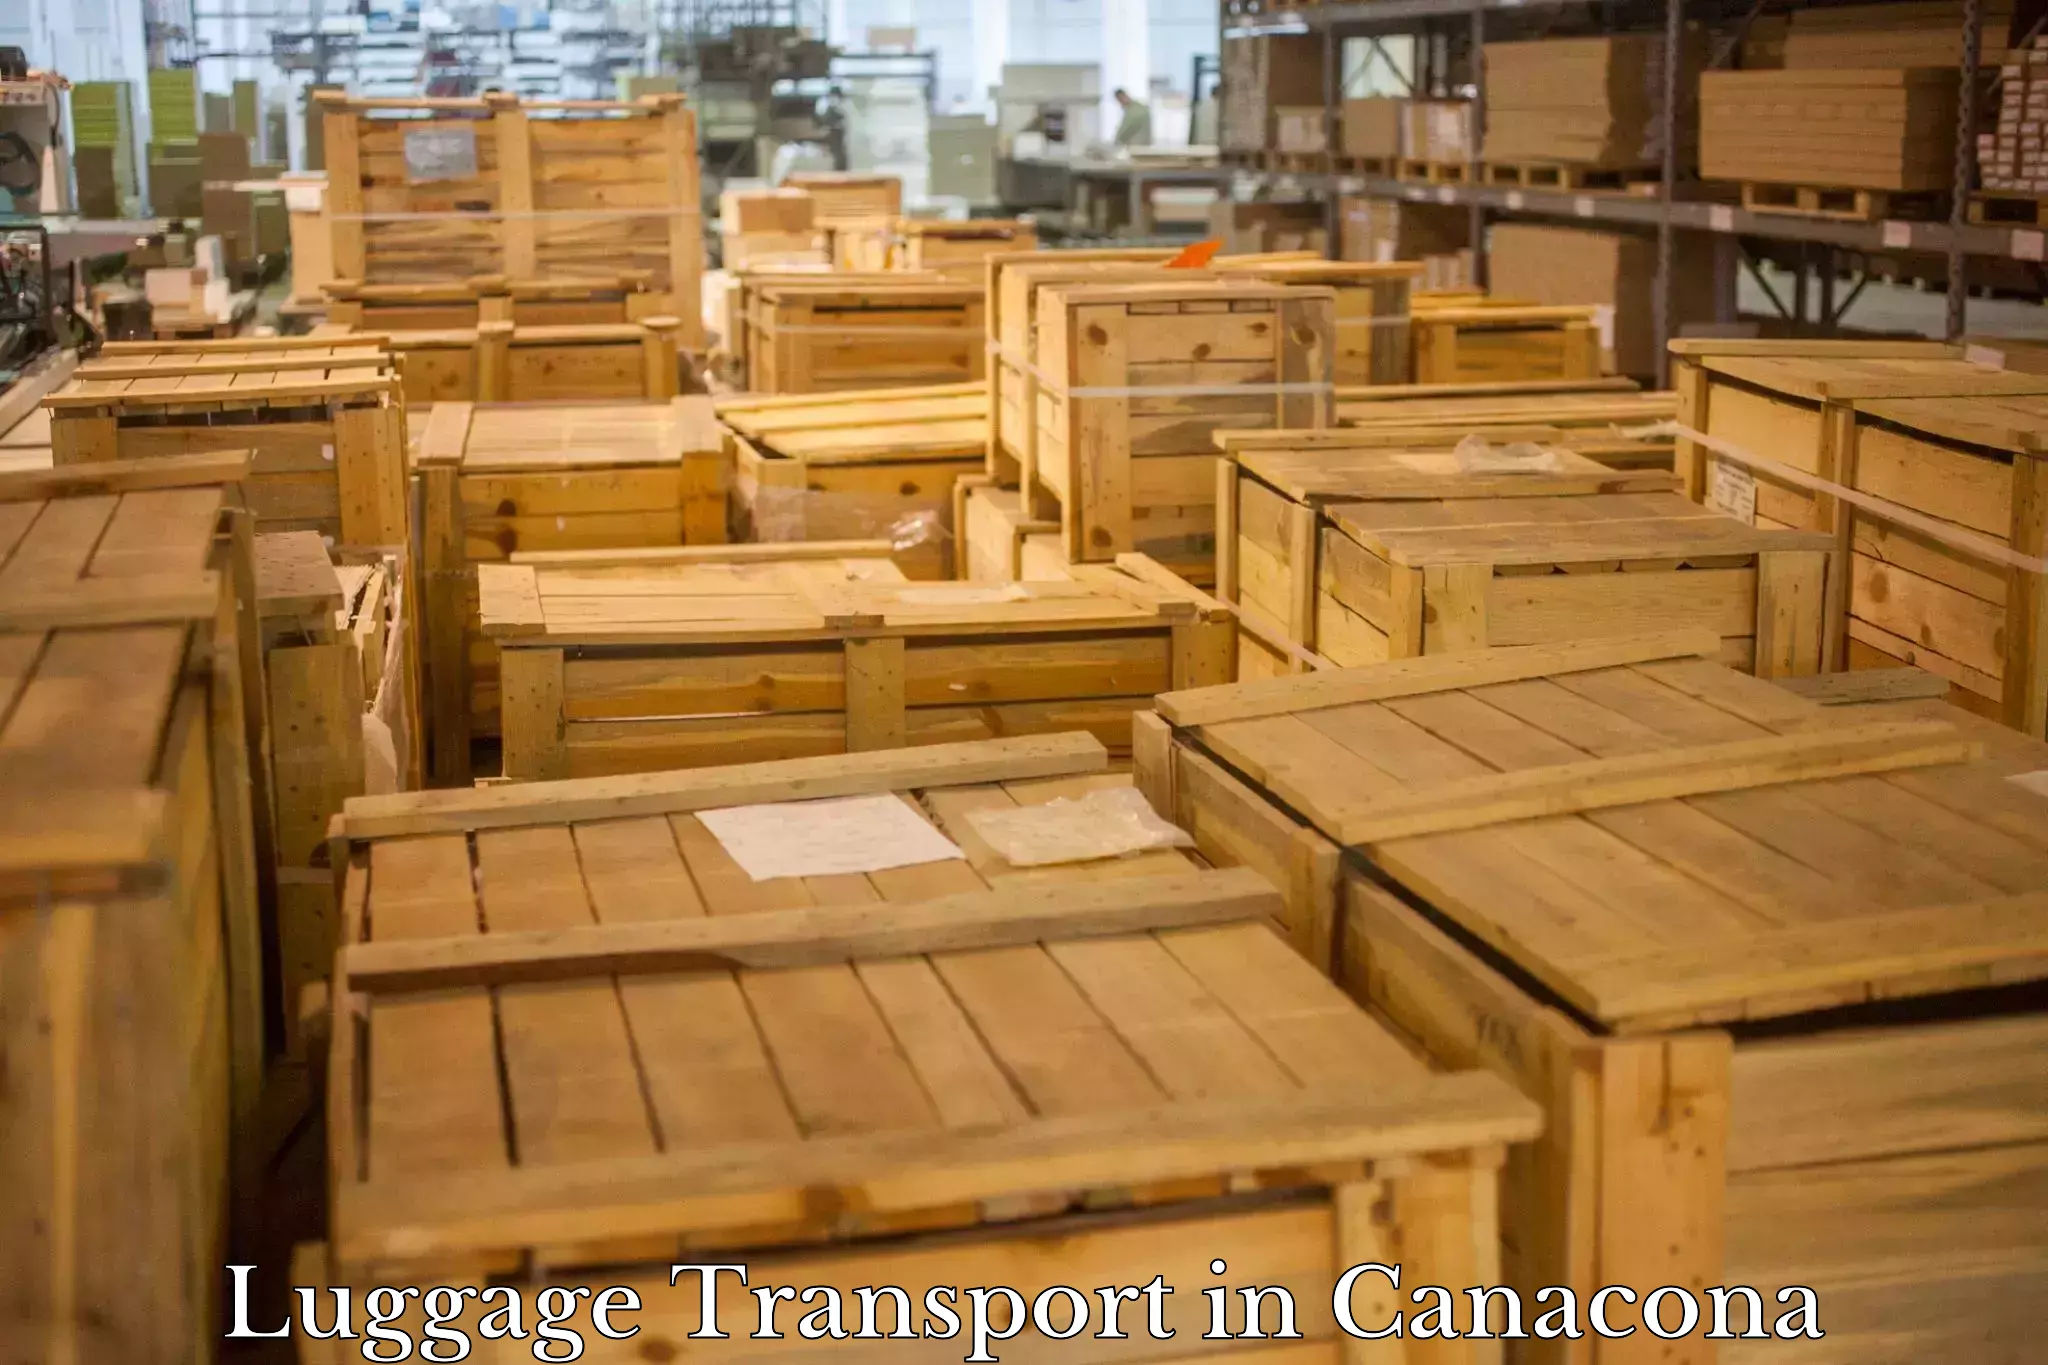 Luggage shipment tracking in Canacona